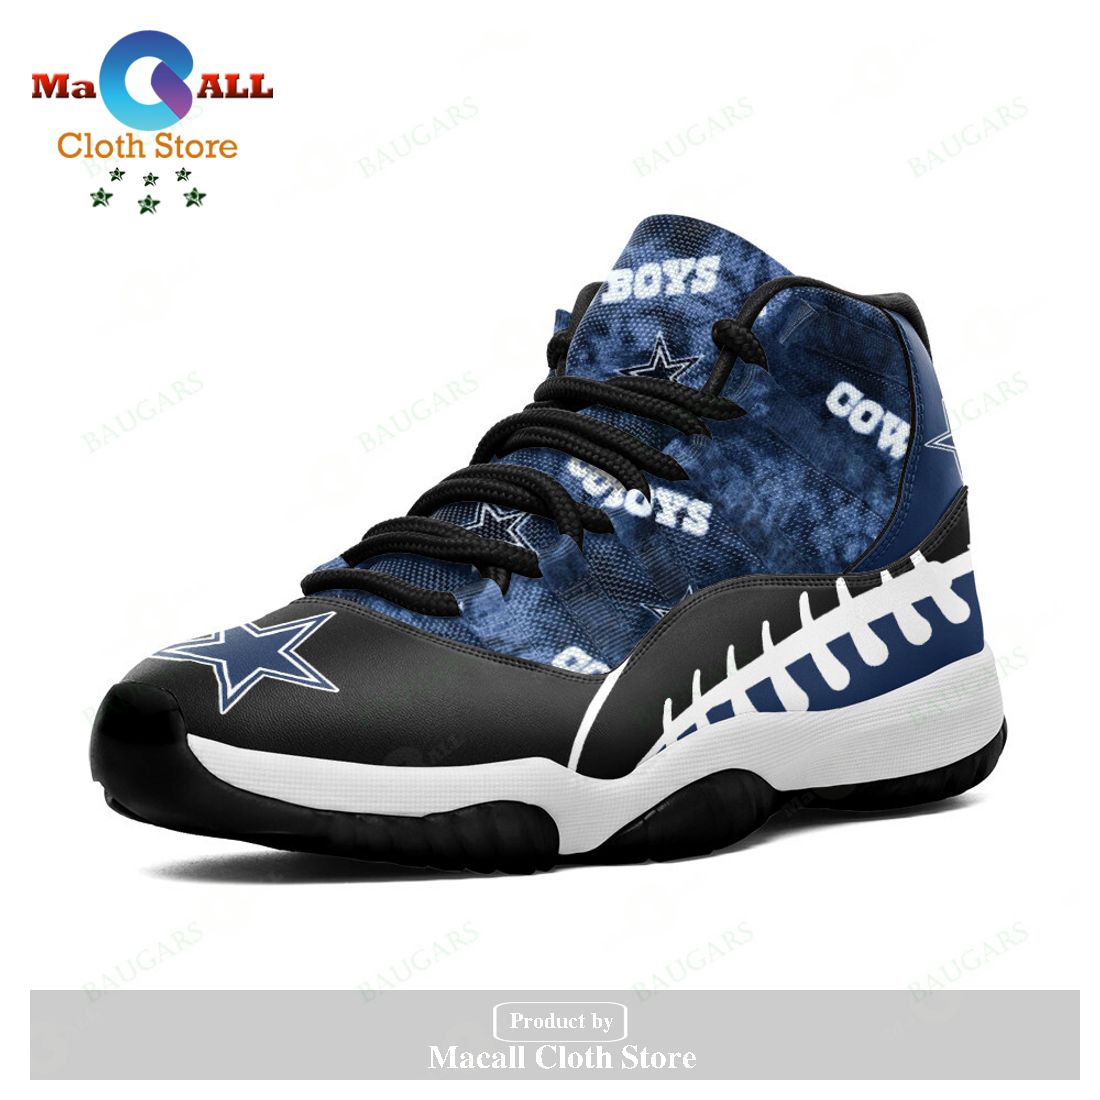 Dallas Cowboys Christmas Pattern Style Sneaker Air Jordan 11 Shoes